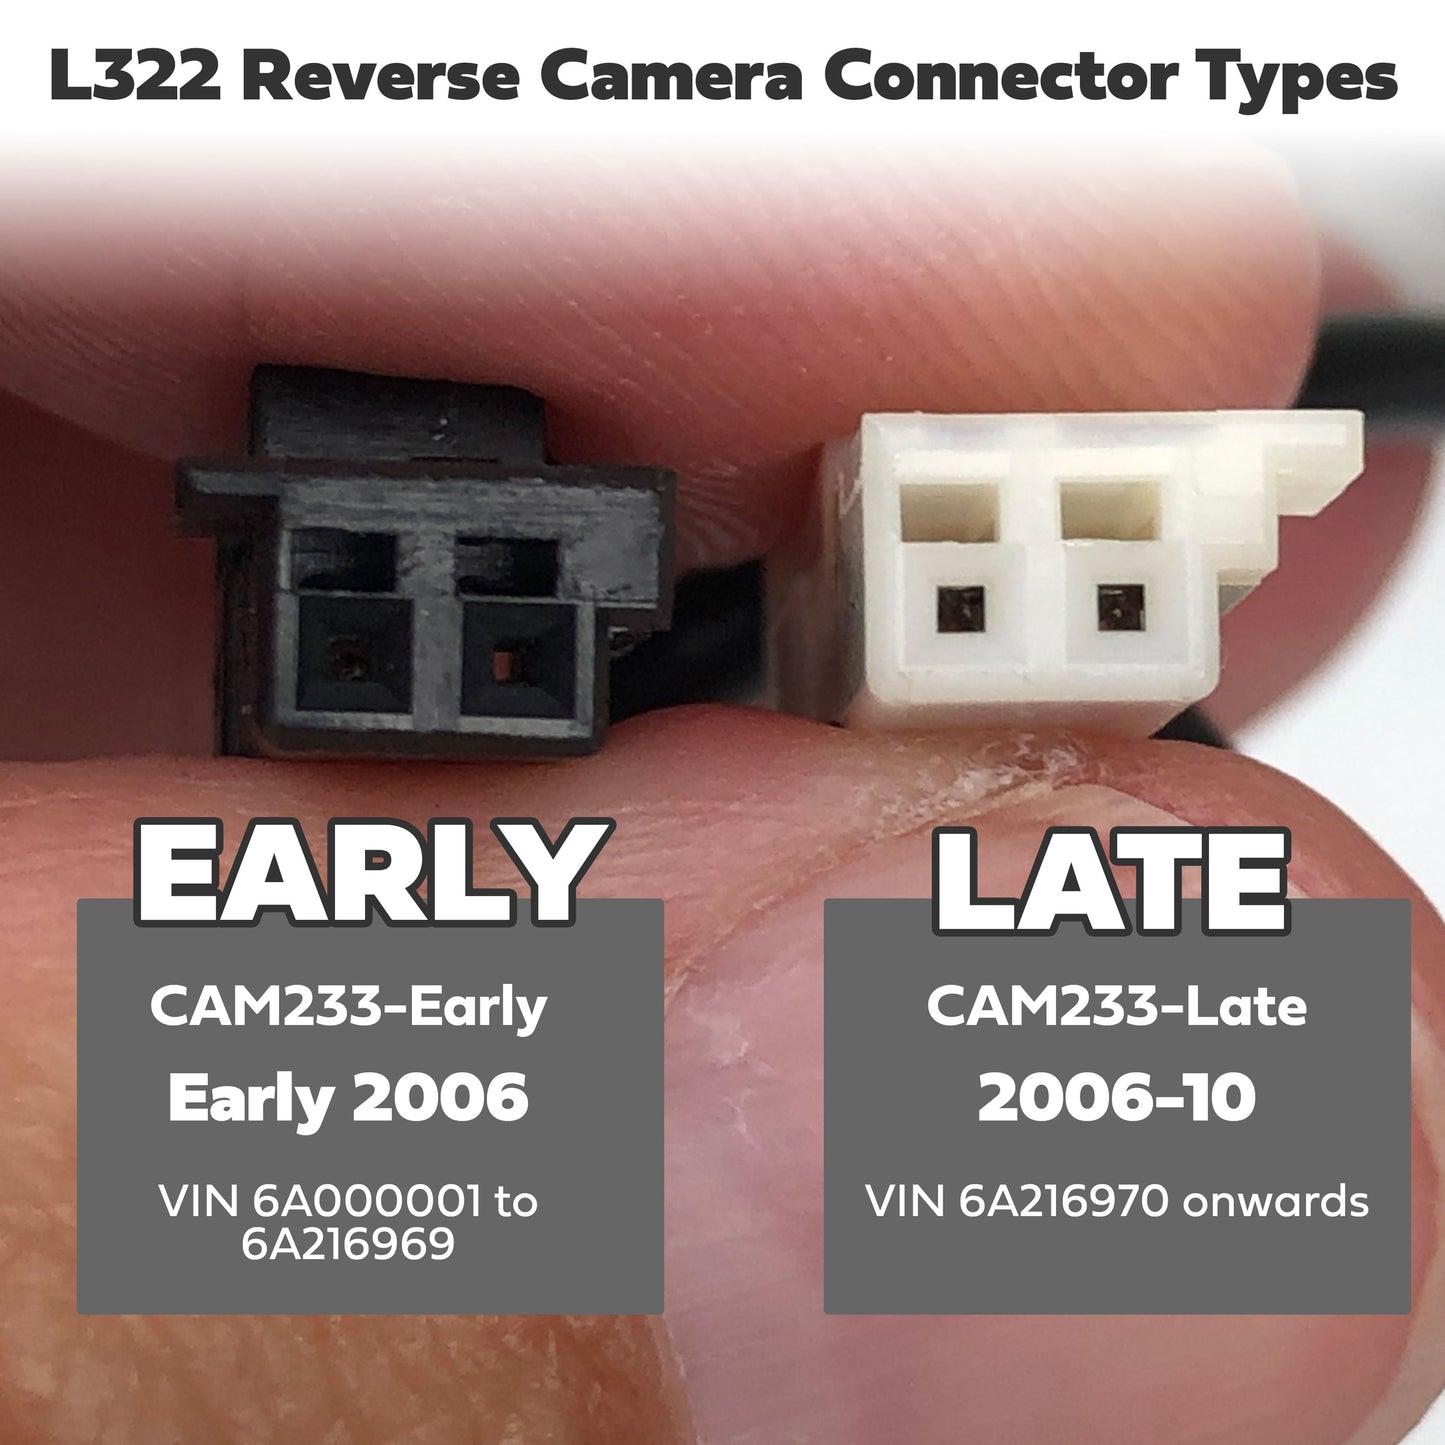 Reversing Camera for Range Rover L322 - Late 2006-09 Type - HSX